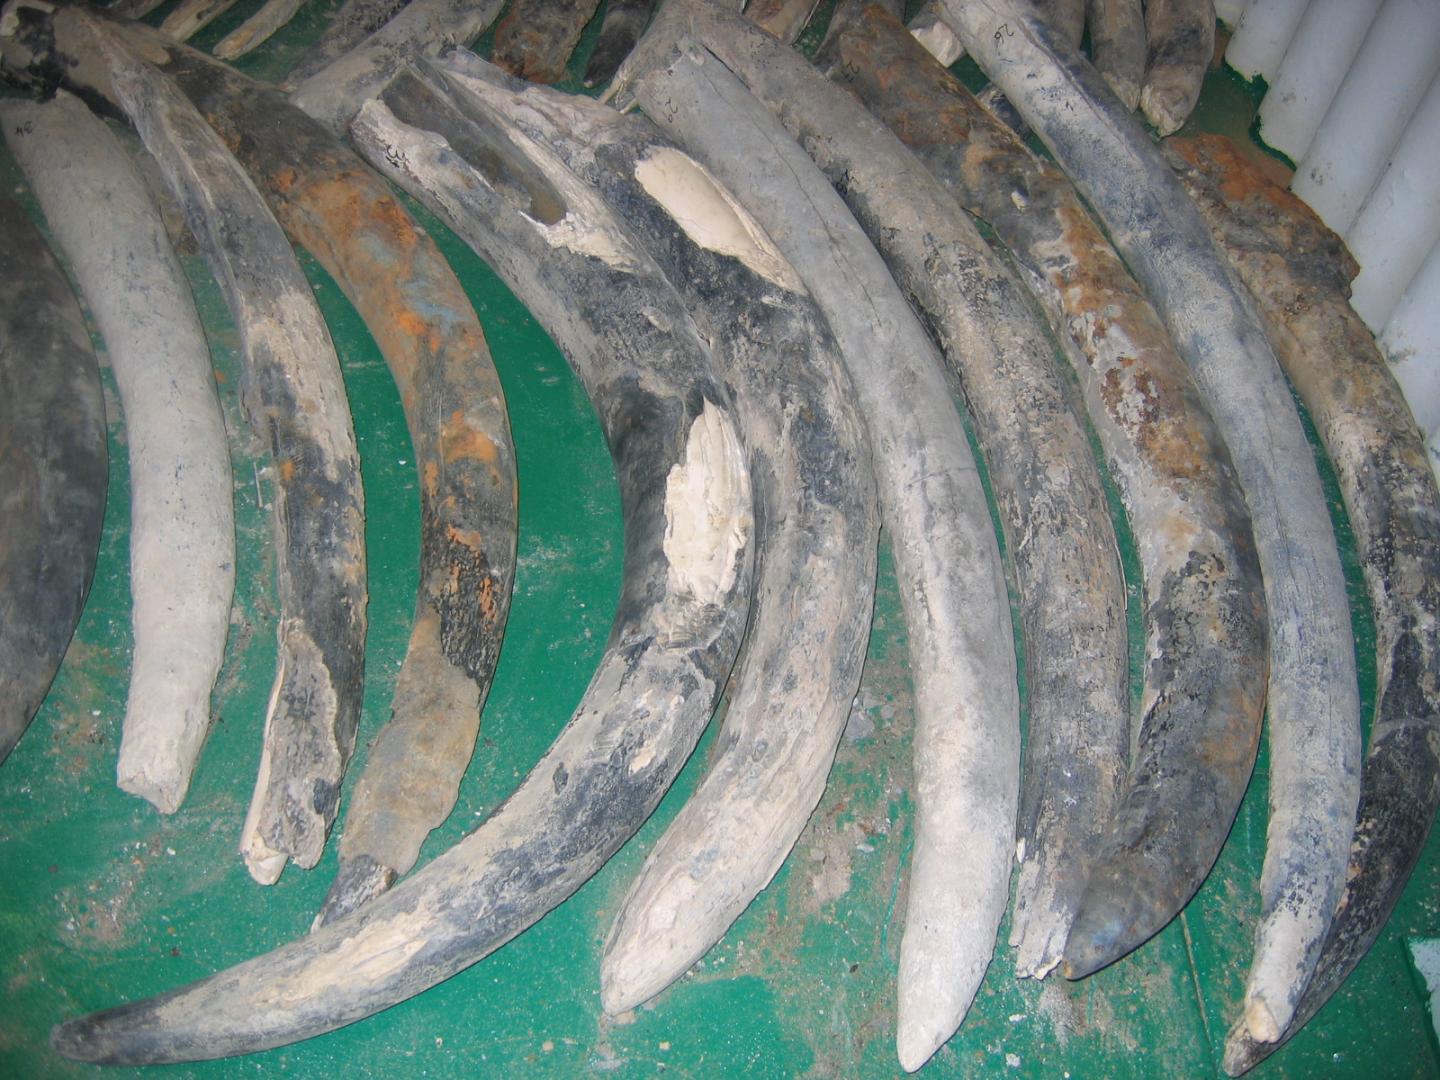 Raw elephant tusks